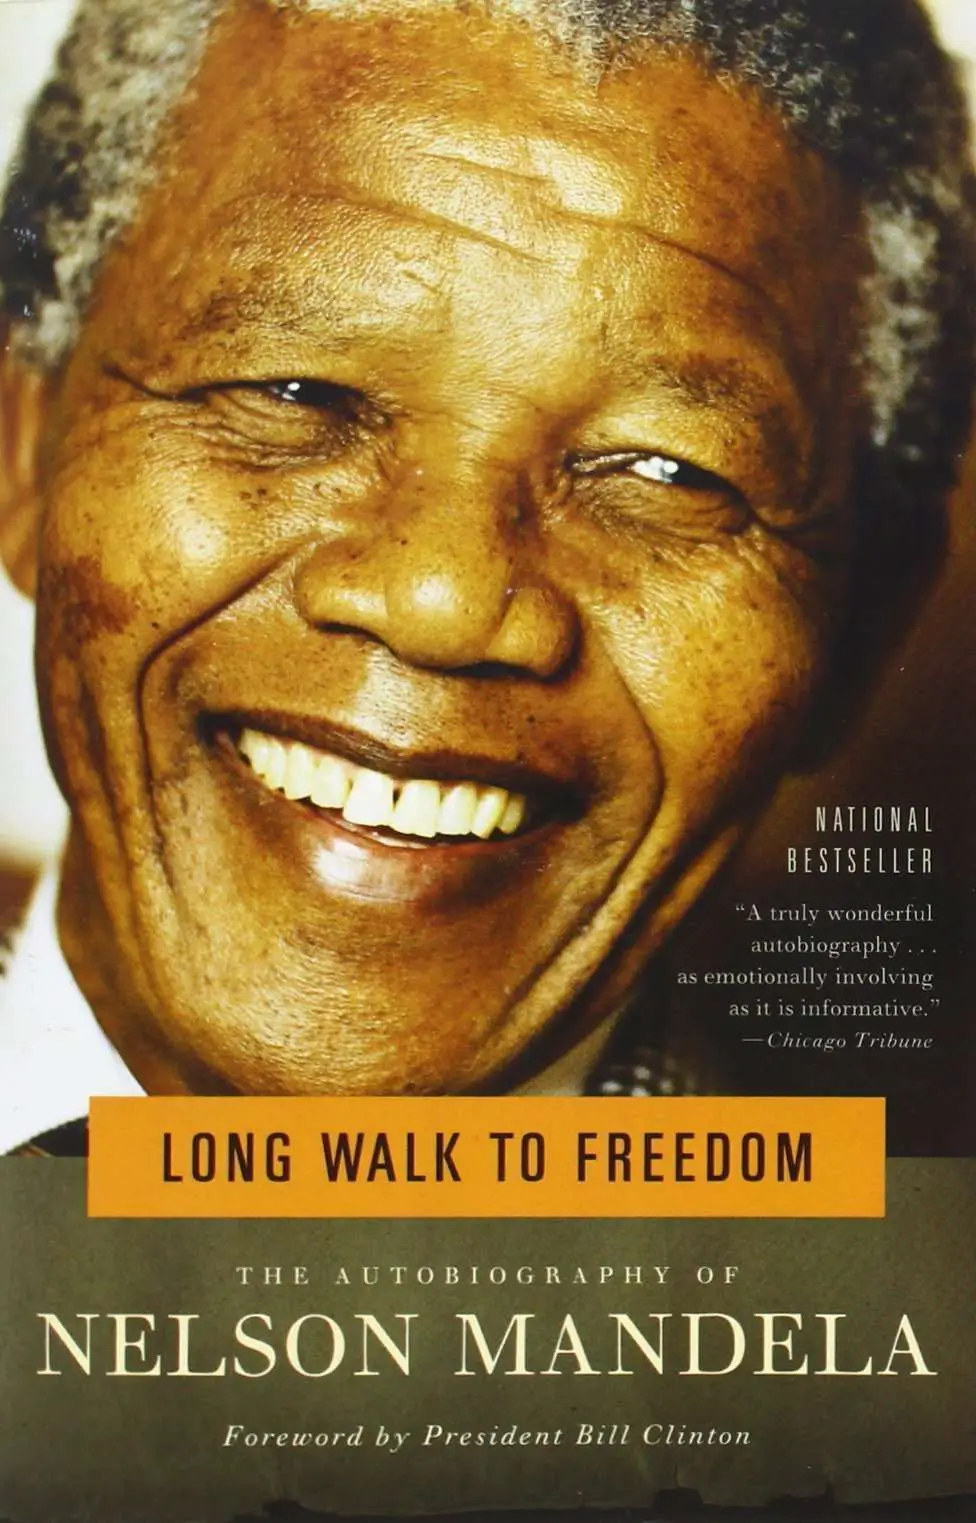 Nelson Mandela, long walk to freedom